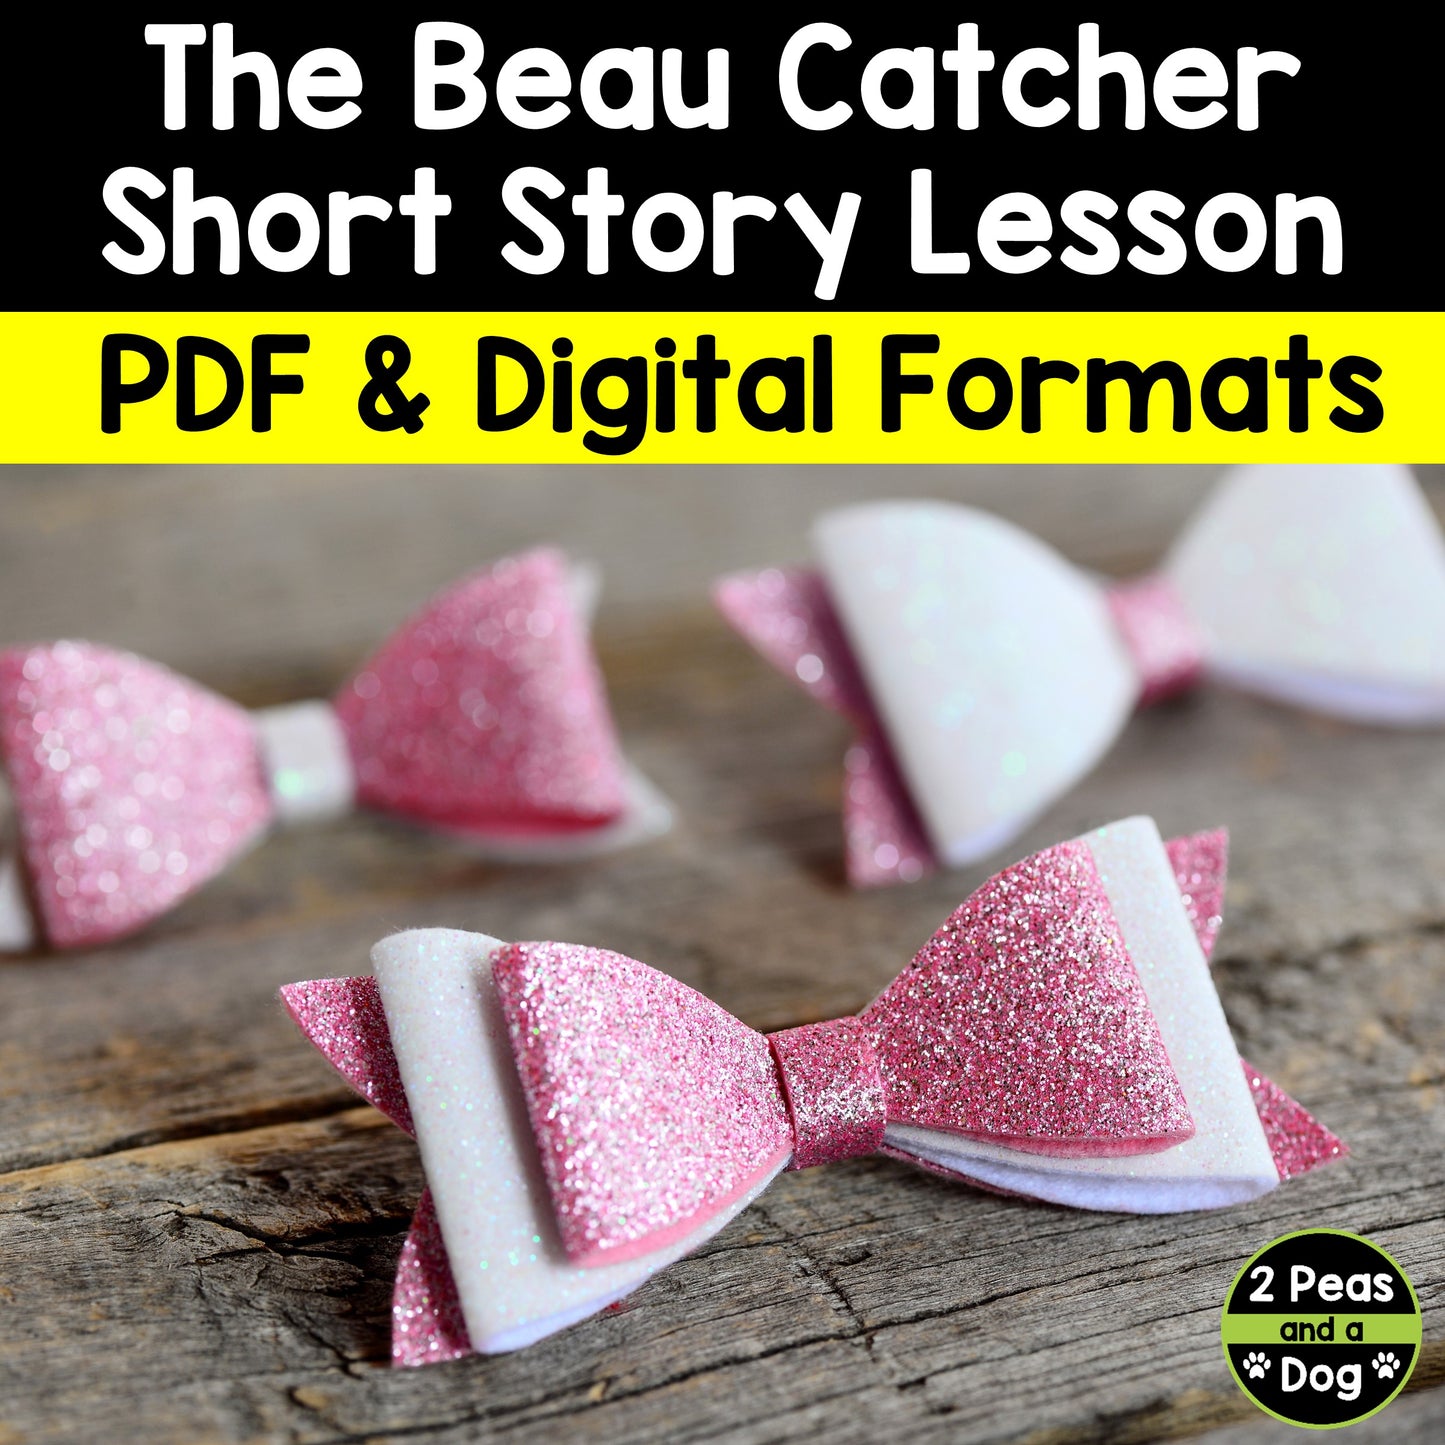 The Beau Catcher Short Story Lesson